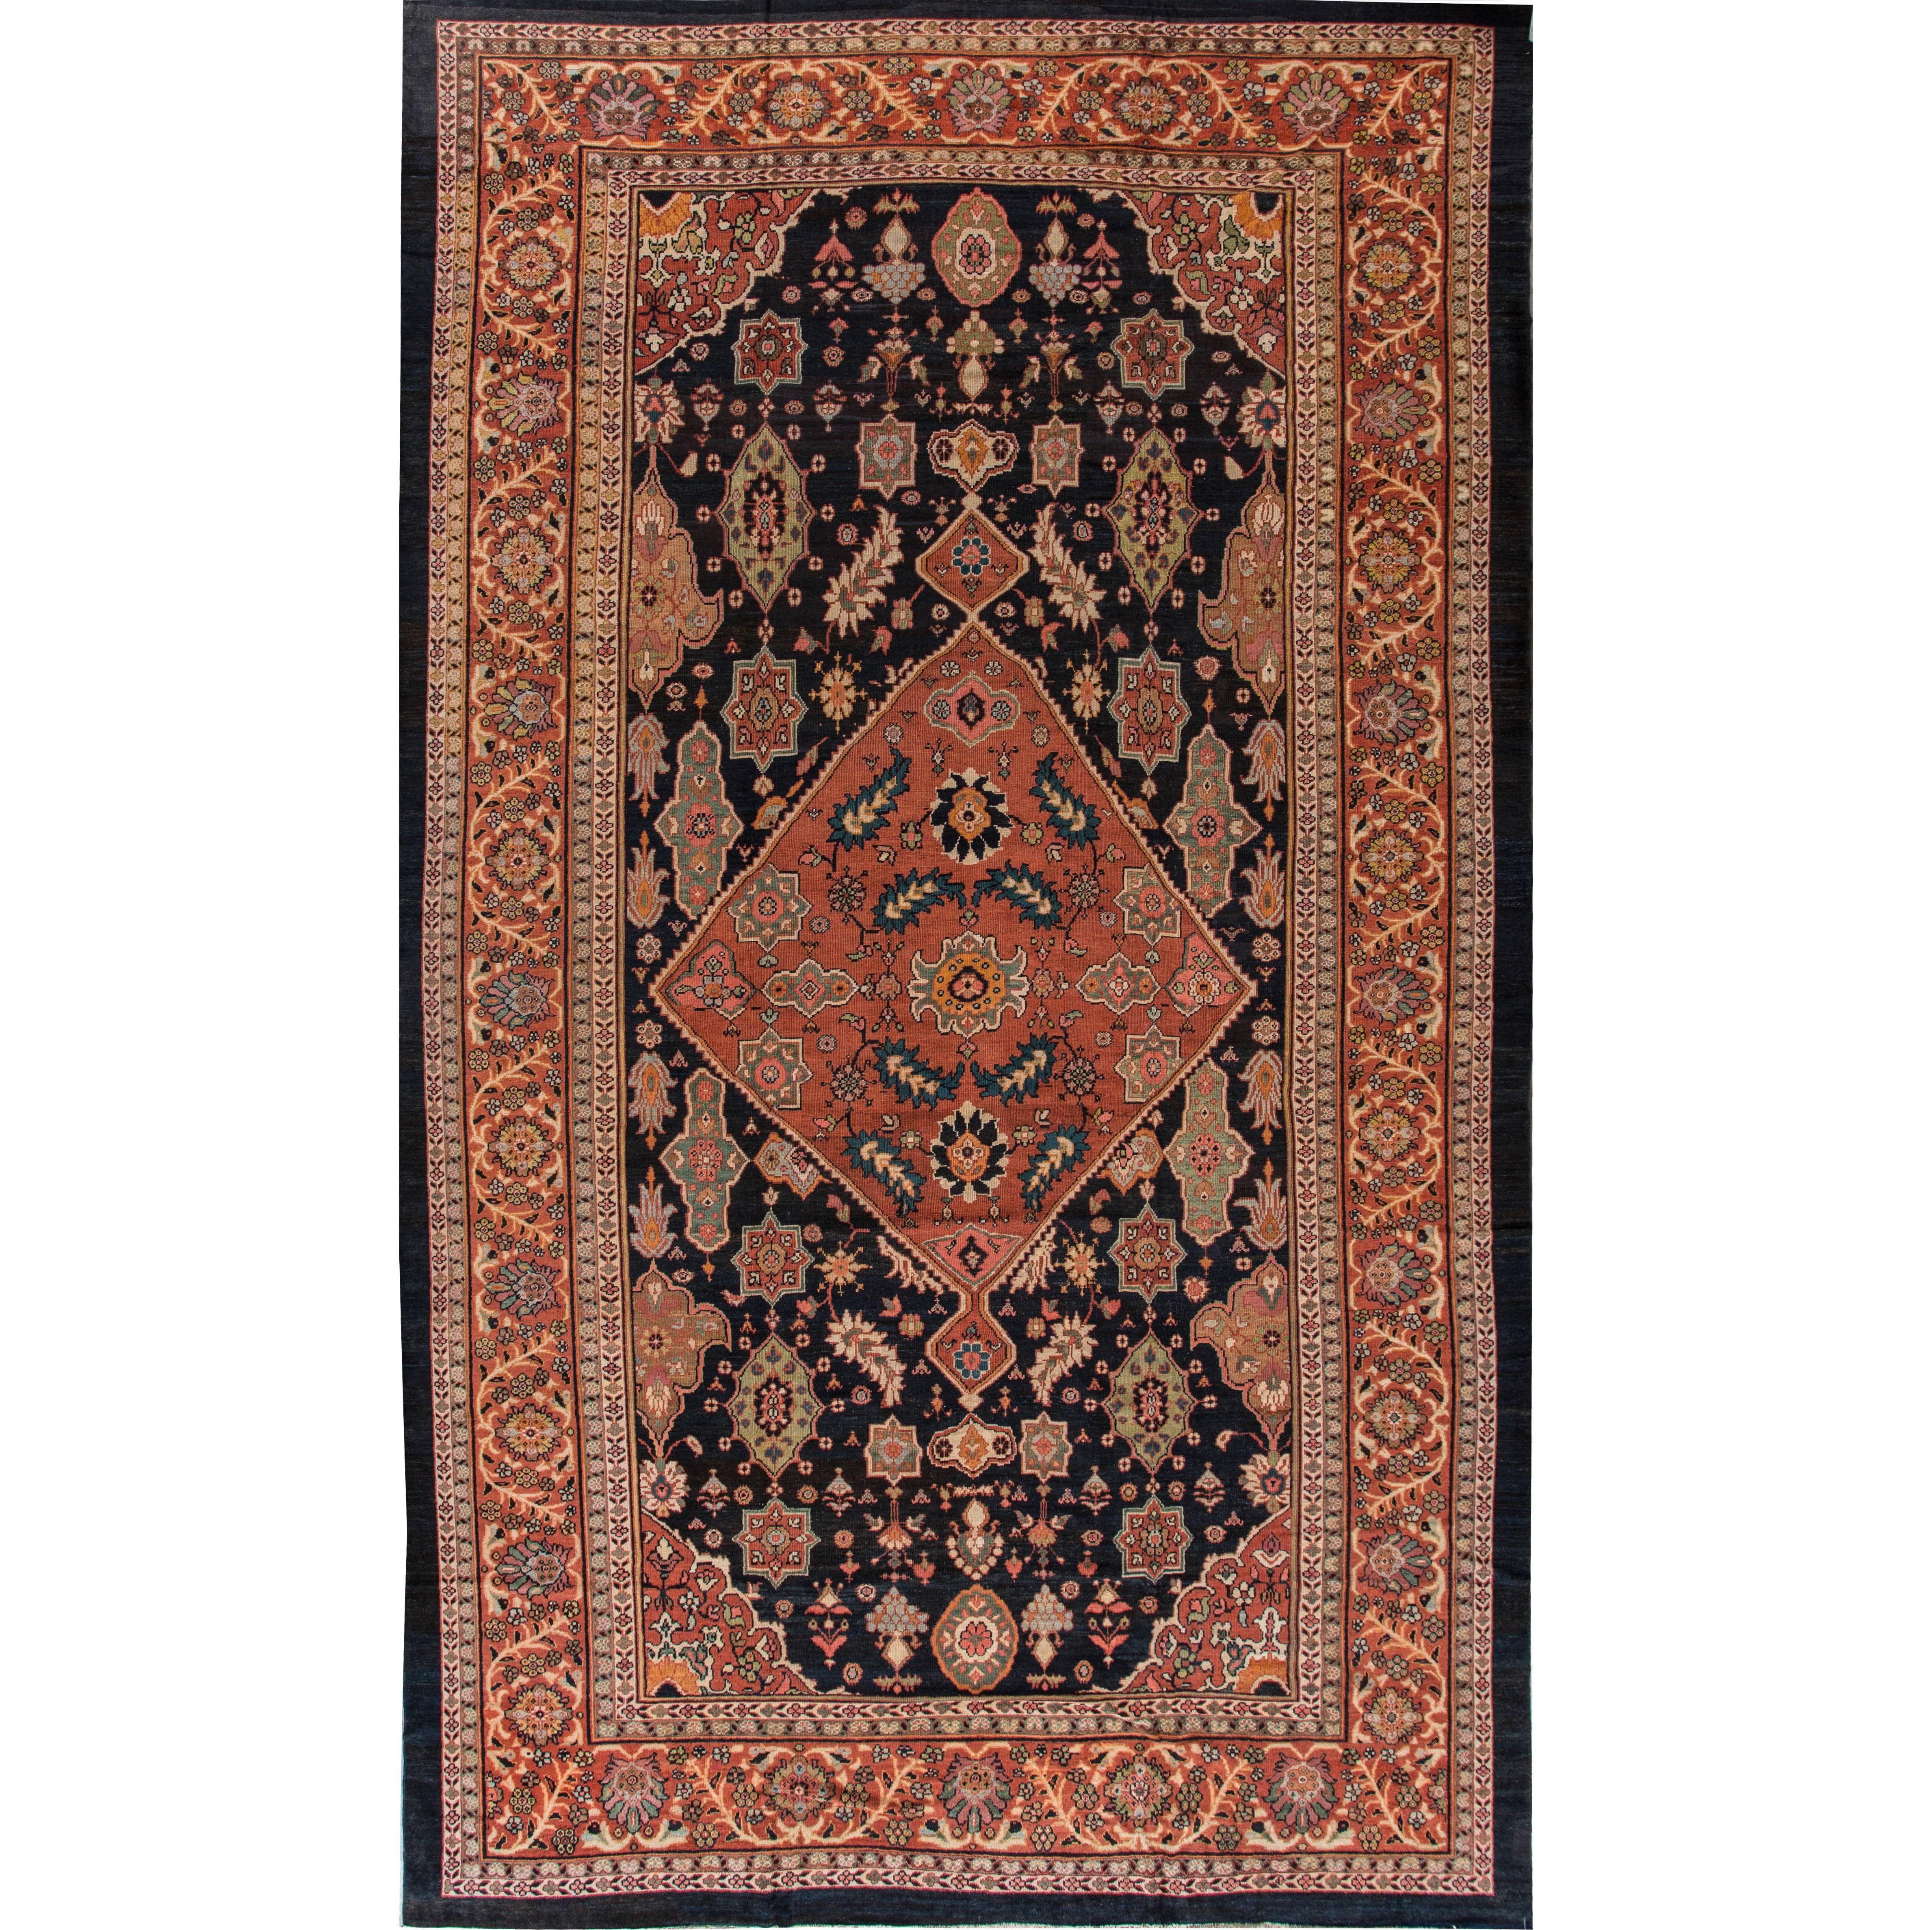 Simply Beautiful Antique Persian Mahal Rug For Sale